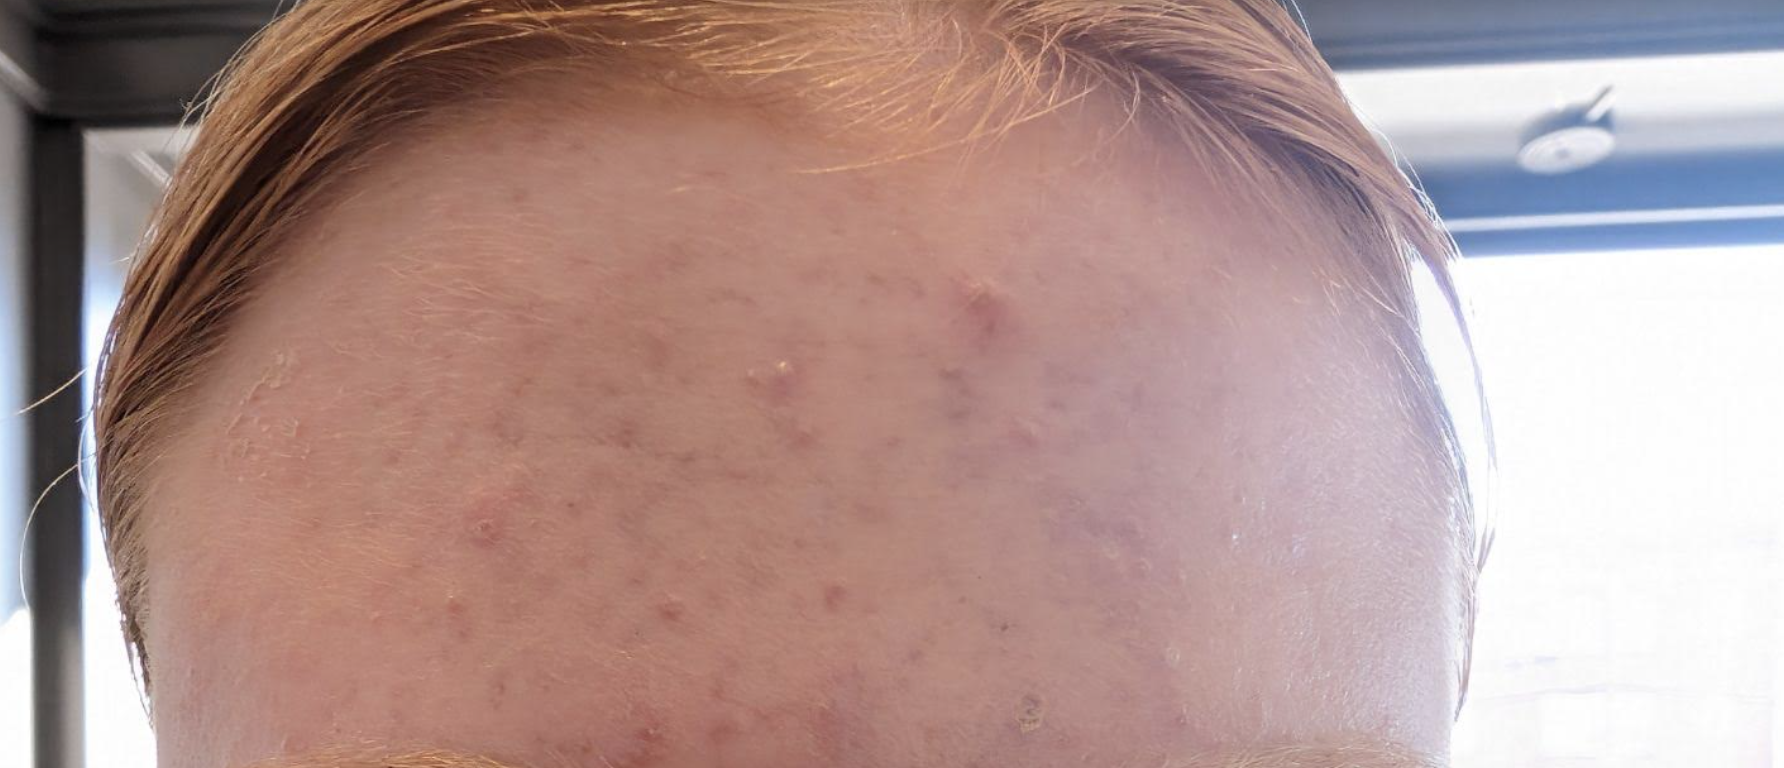 post chemical peel acne treatment